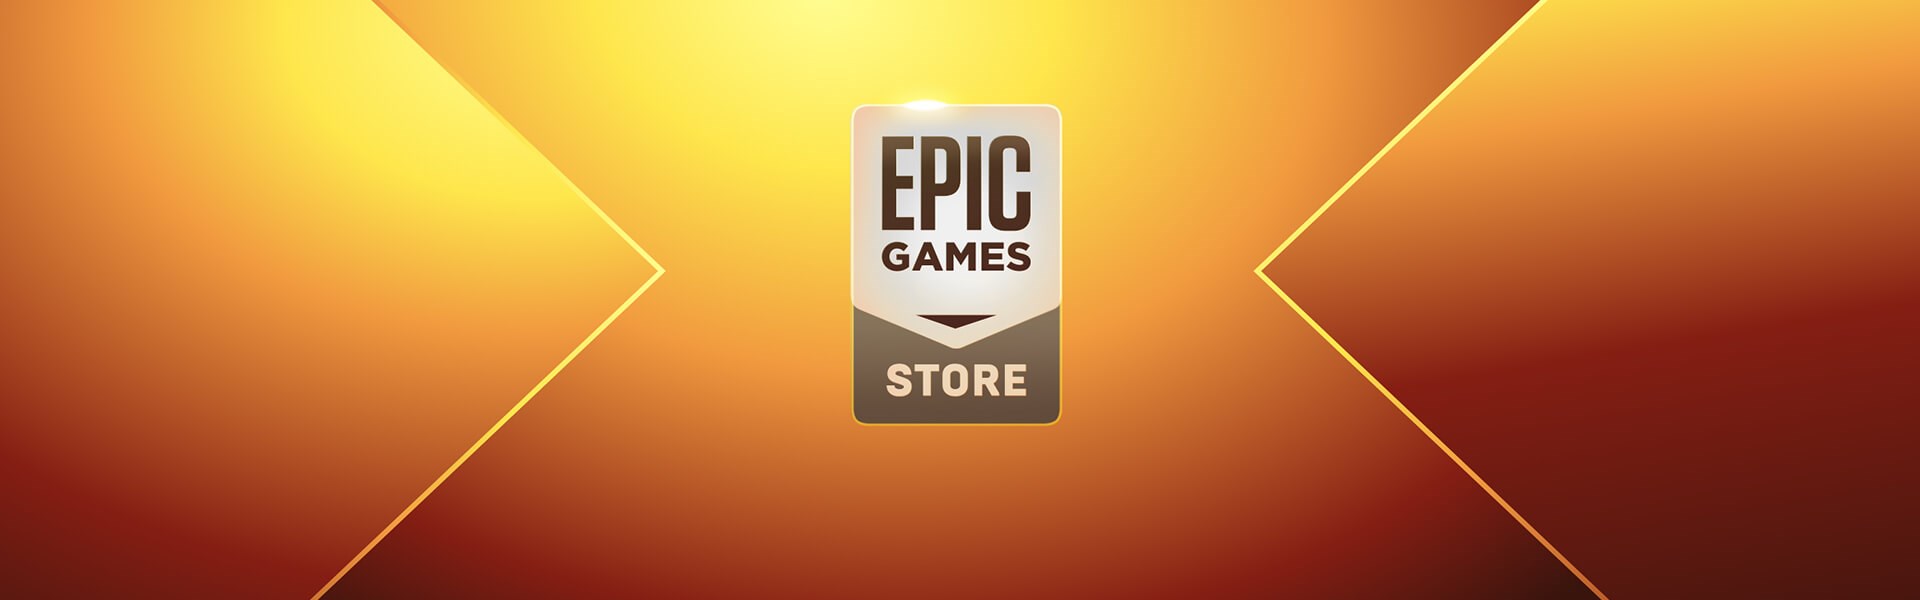 Epic Games'ten toplamda 270 TL'lik iki oyun hediye